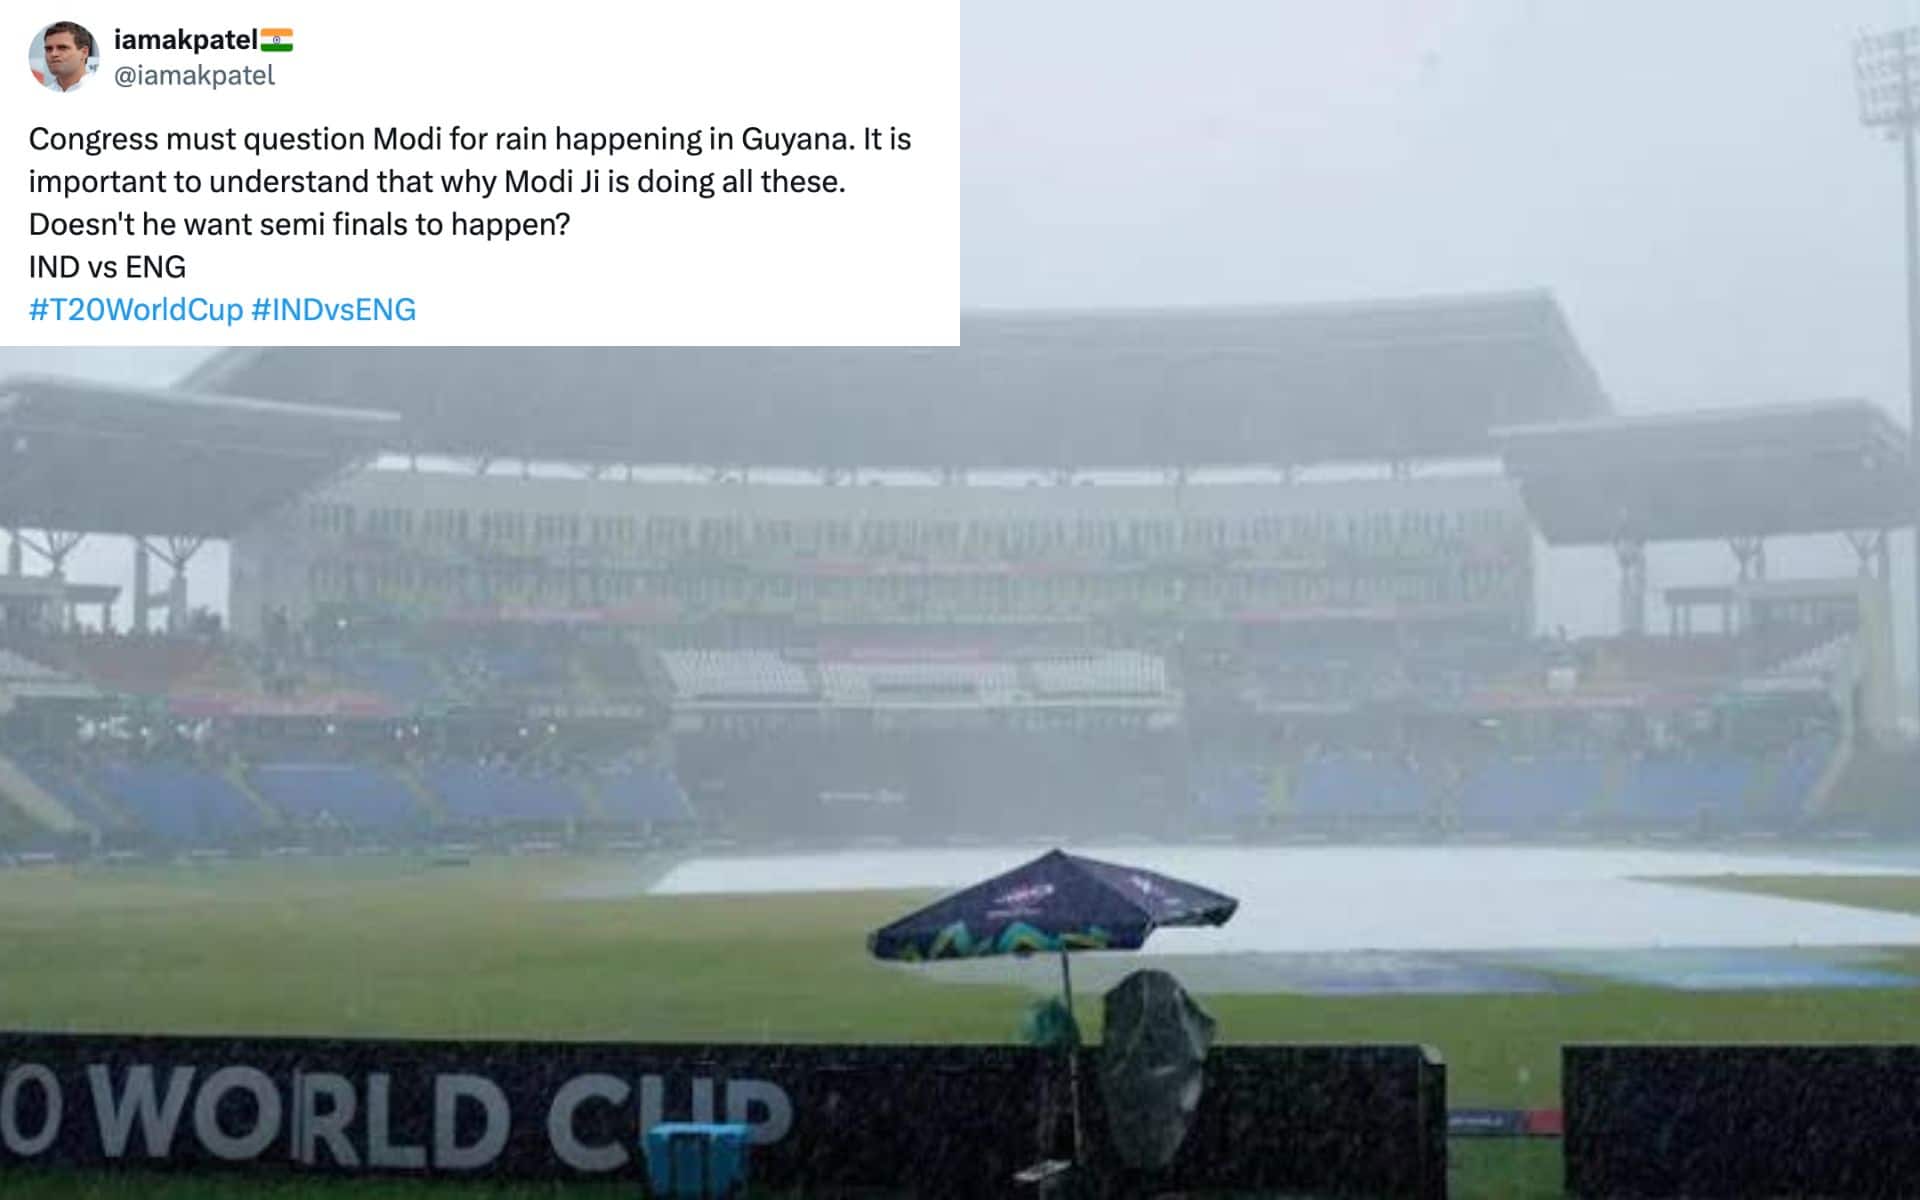 'Dhruv Rathee Vs Modi...' - Memes Galore As Rain Resumes In Guyana Ahead Of IND Vs ENG